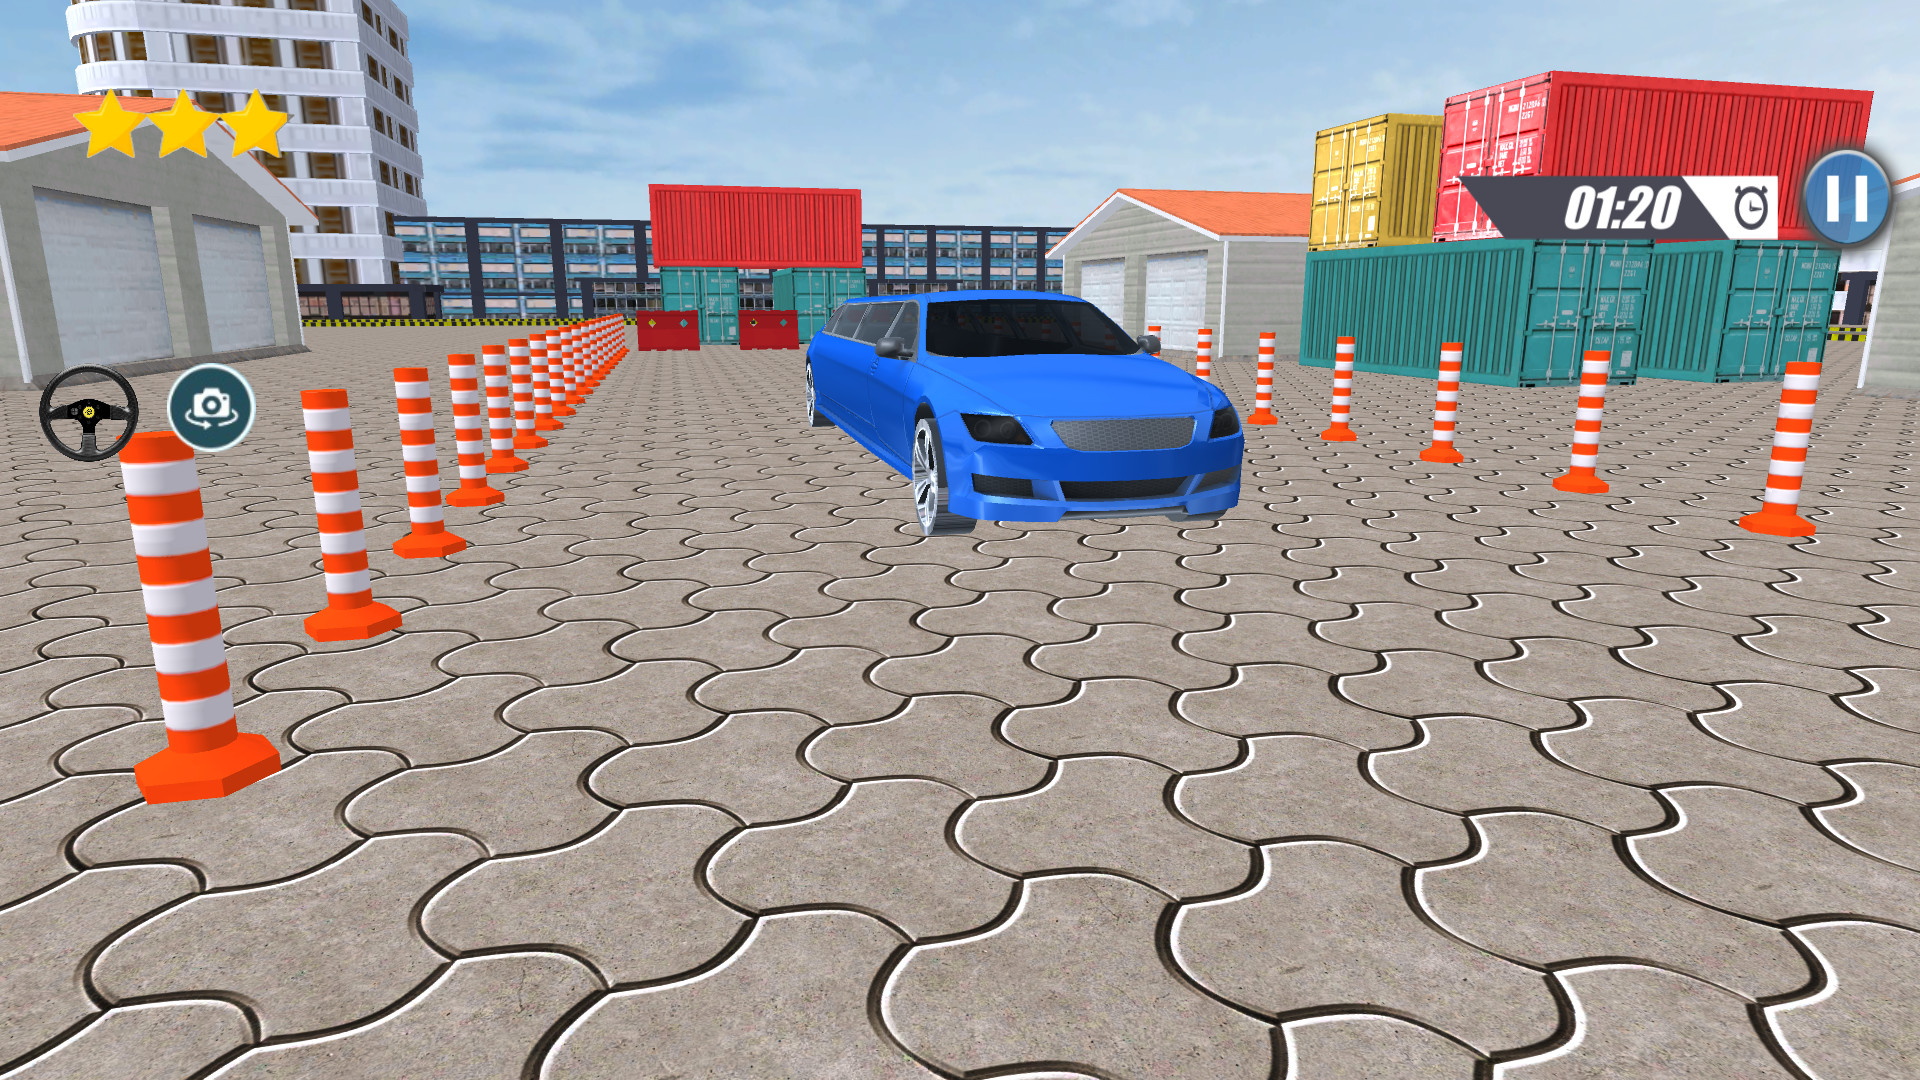 Limousine Parking Simulator Free Download